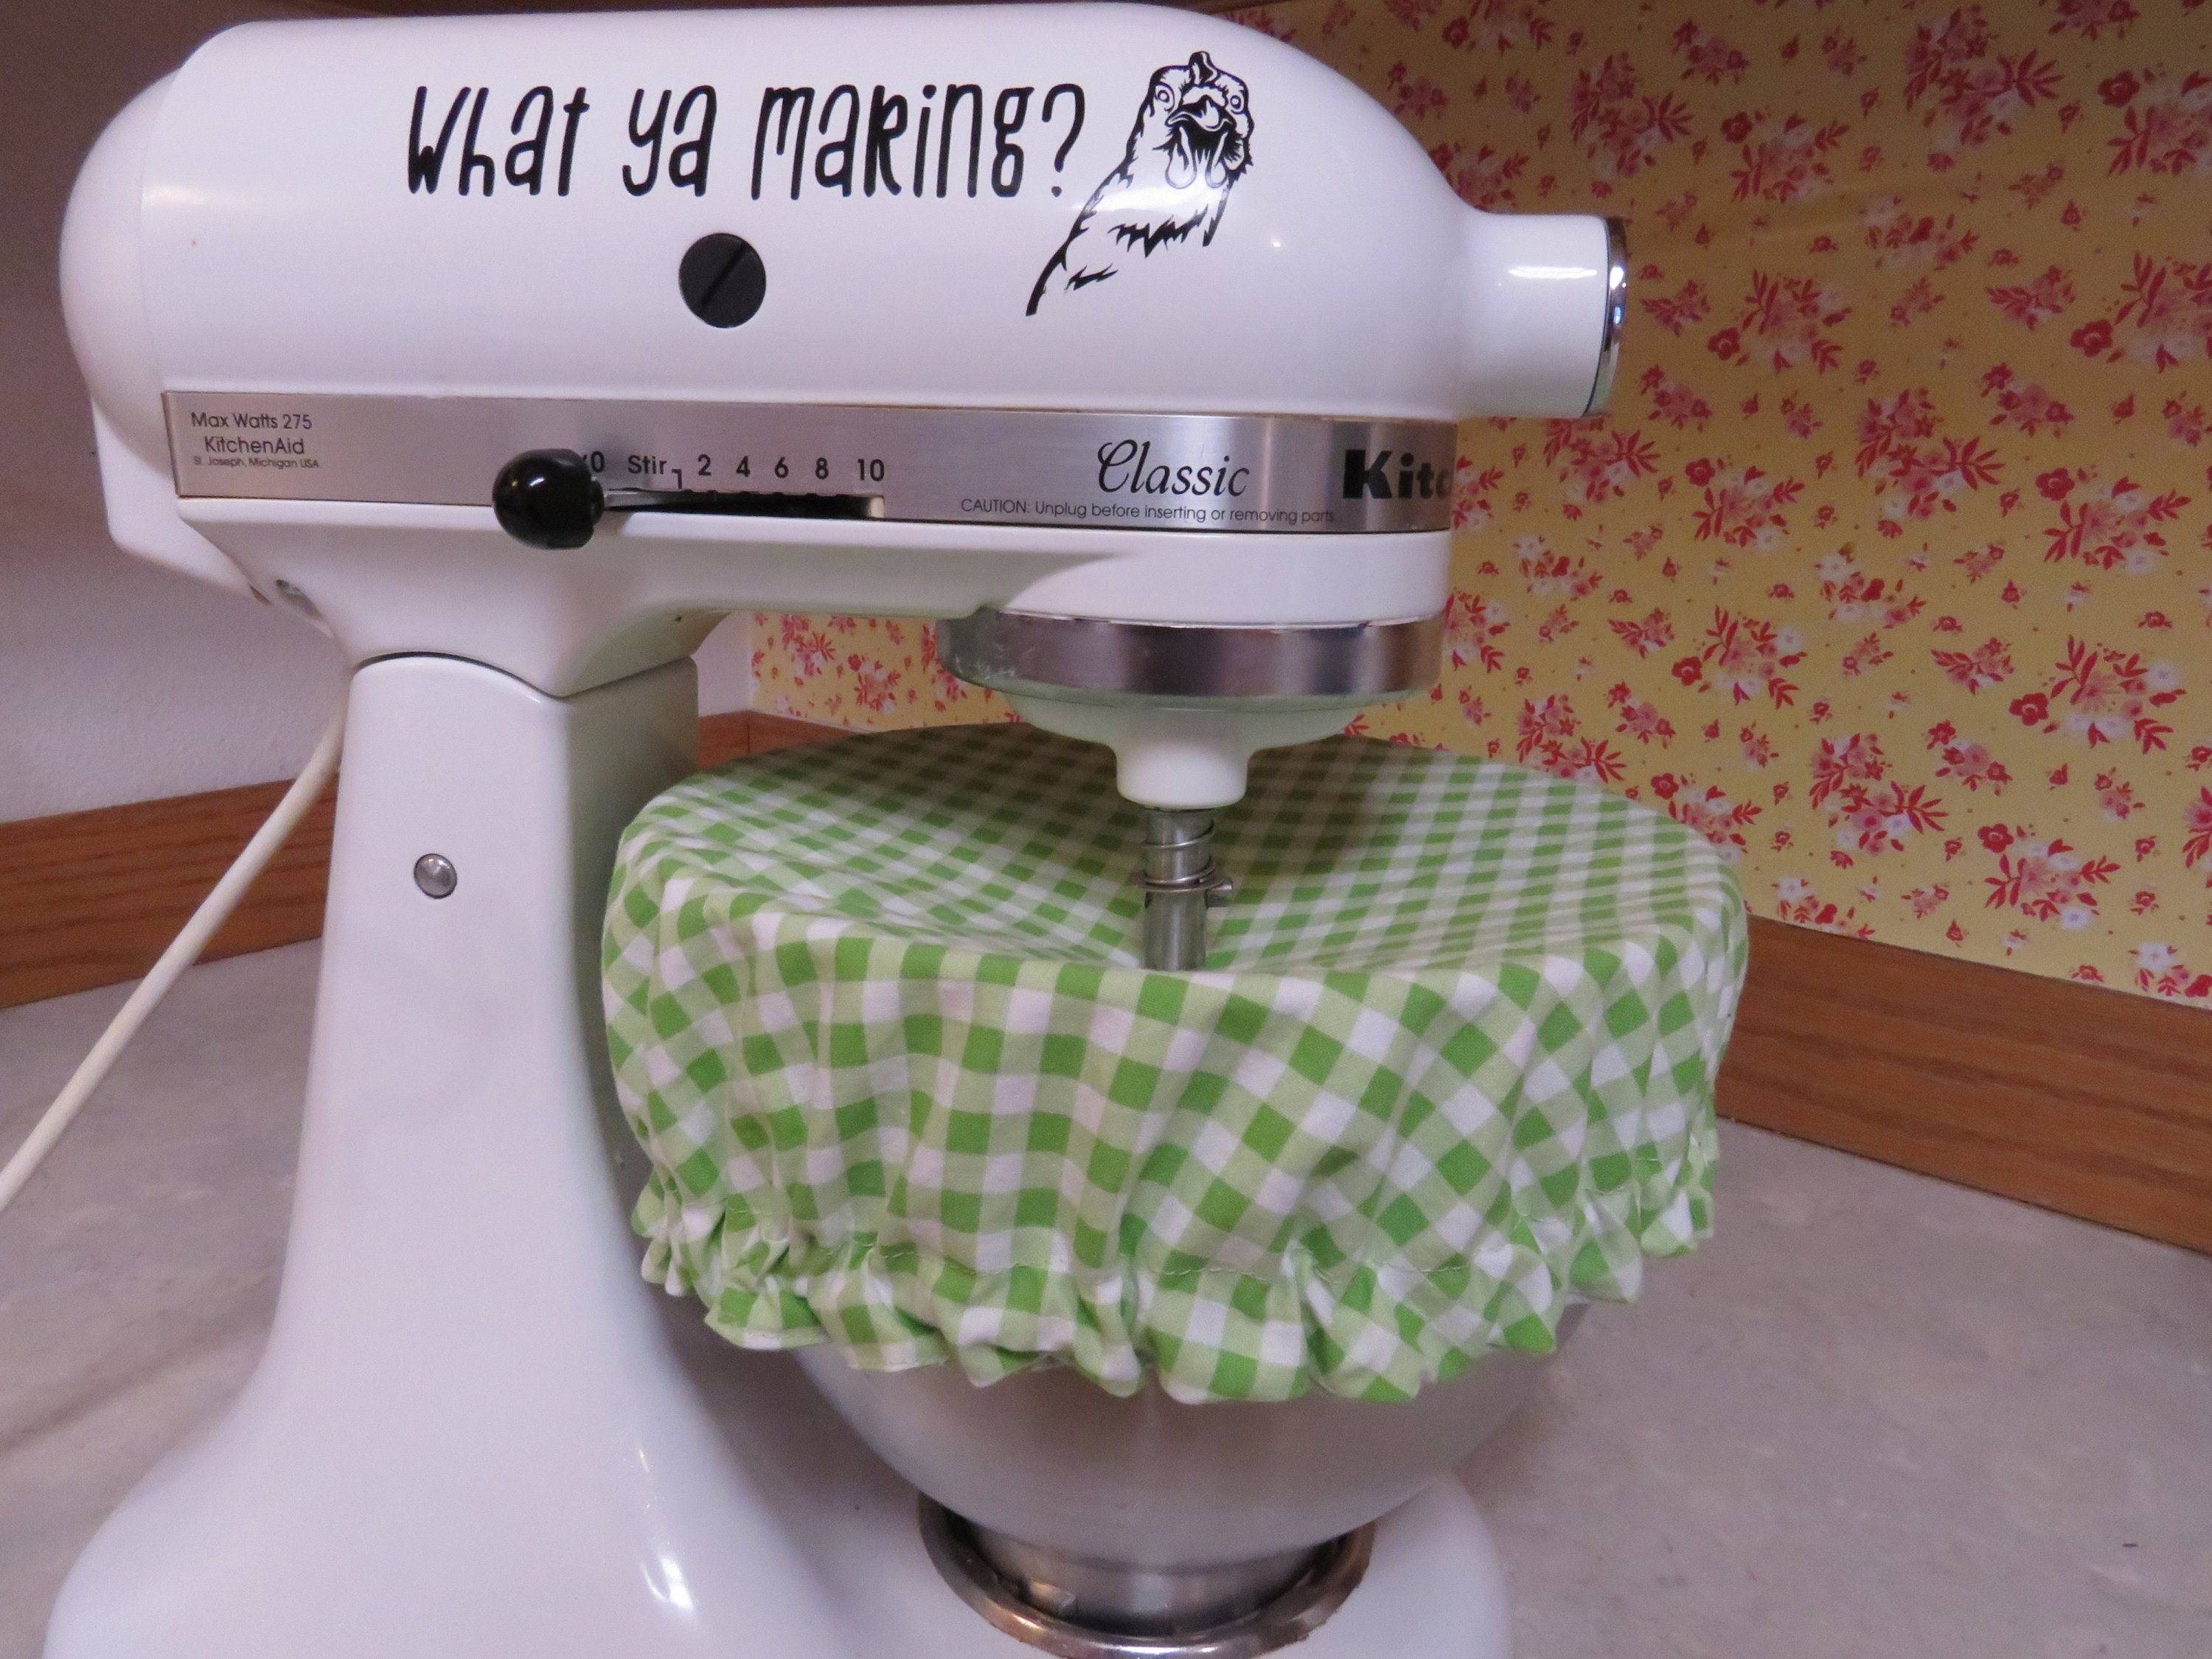 How to Make a KitchenAid Mixer Bowl Cover